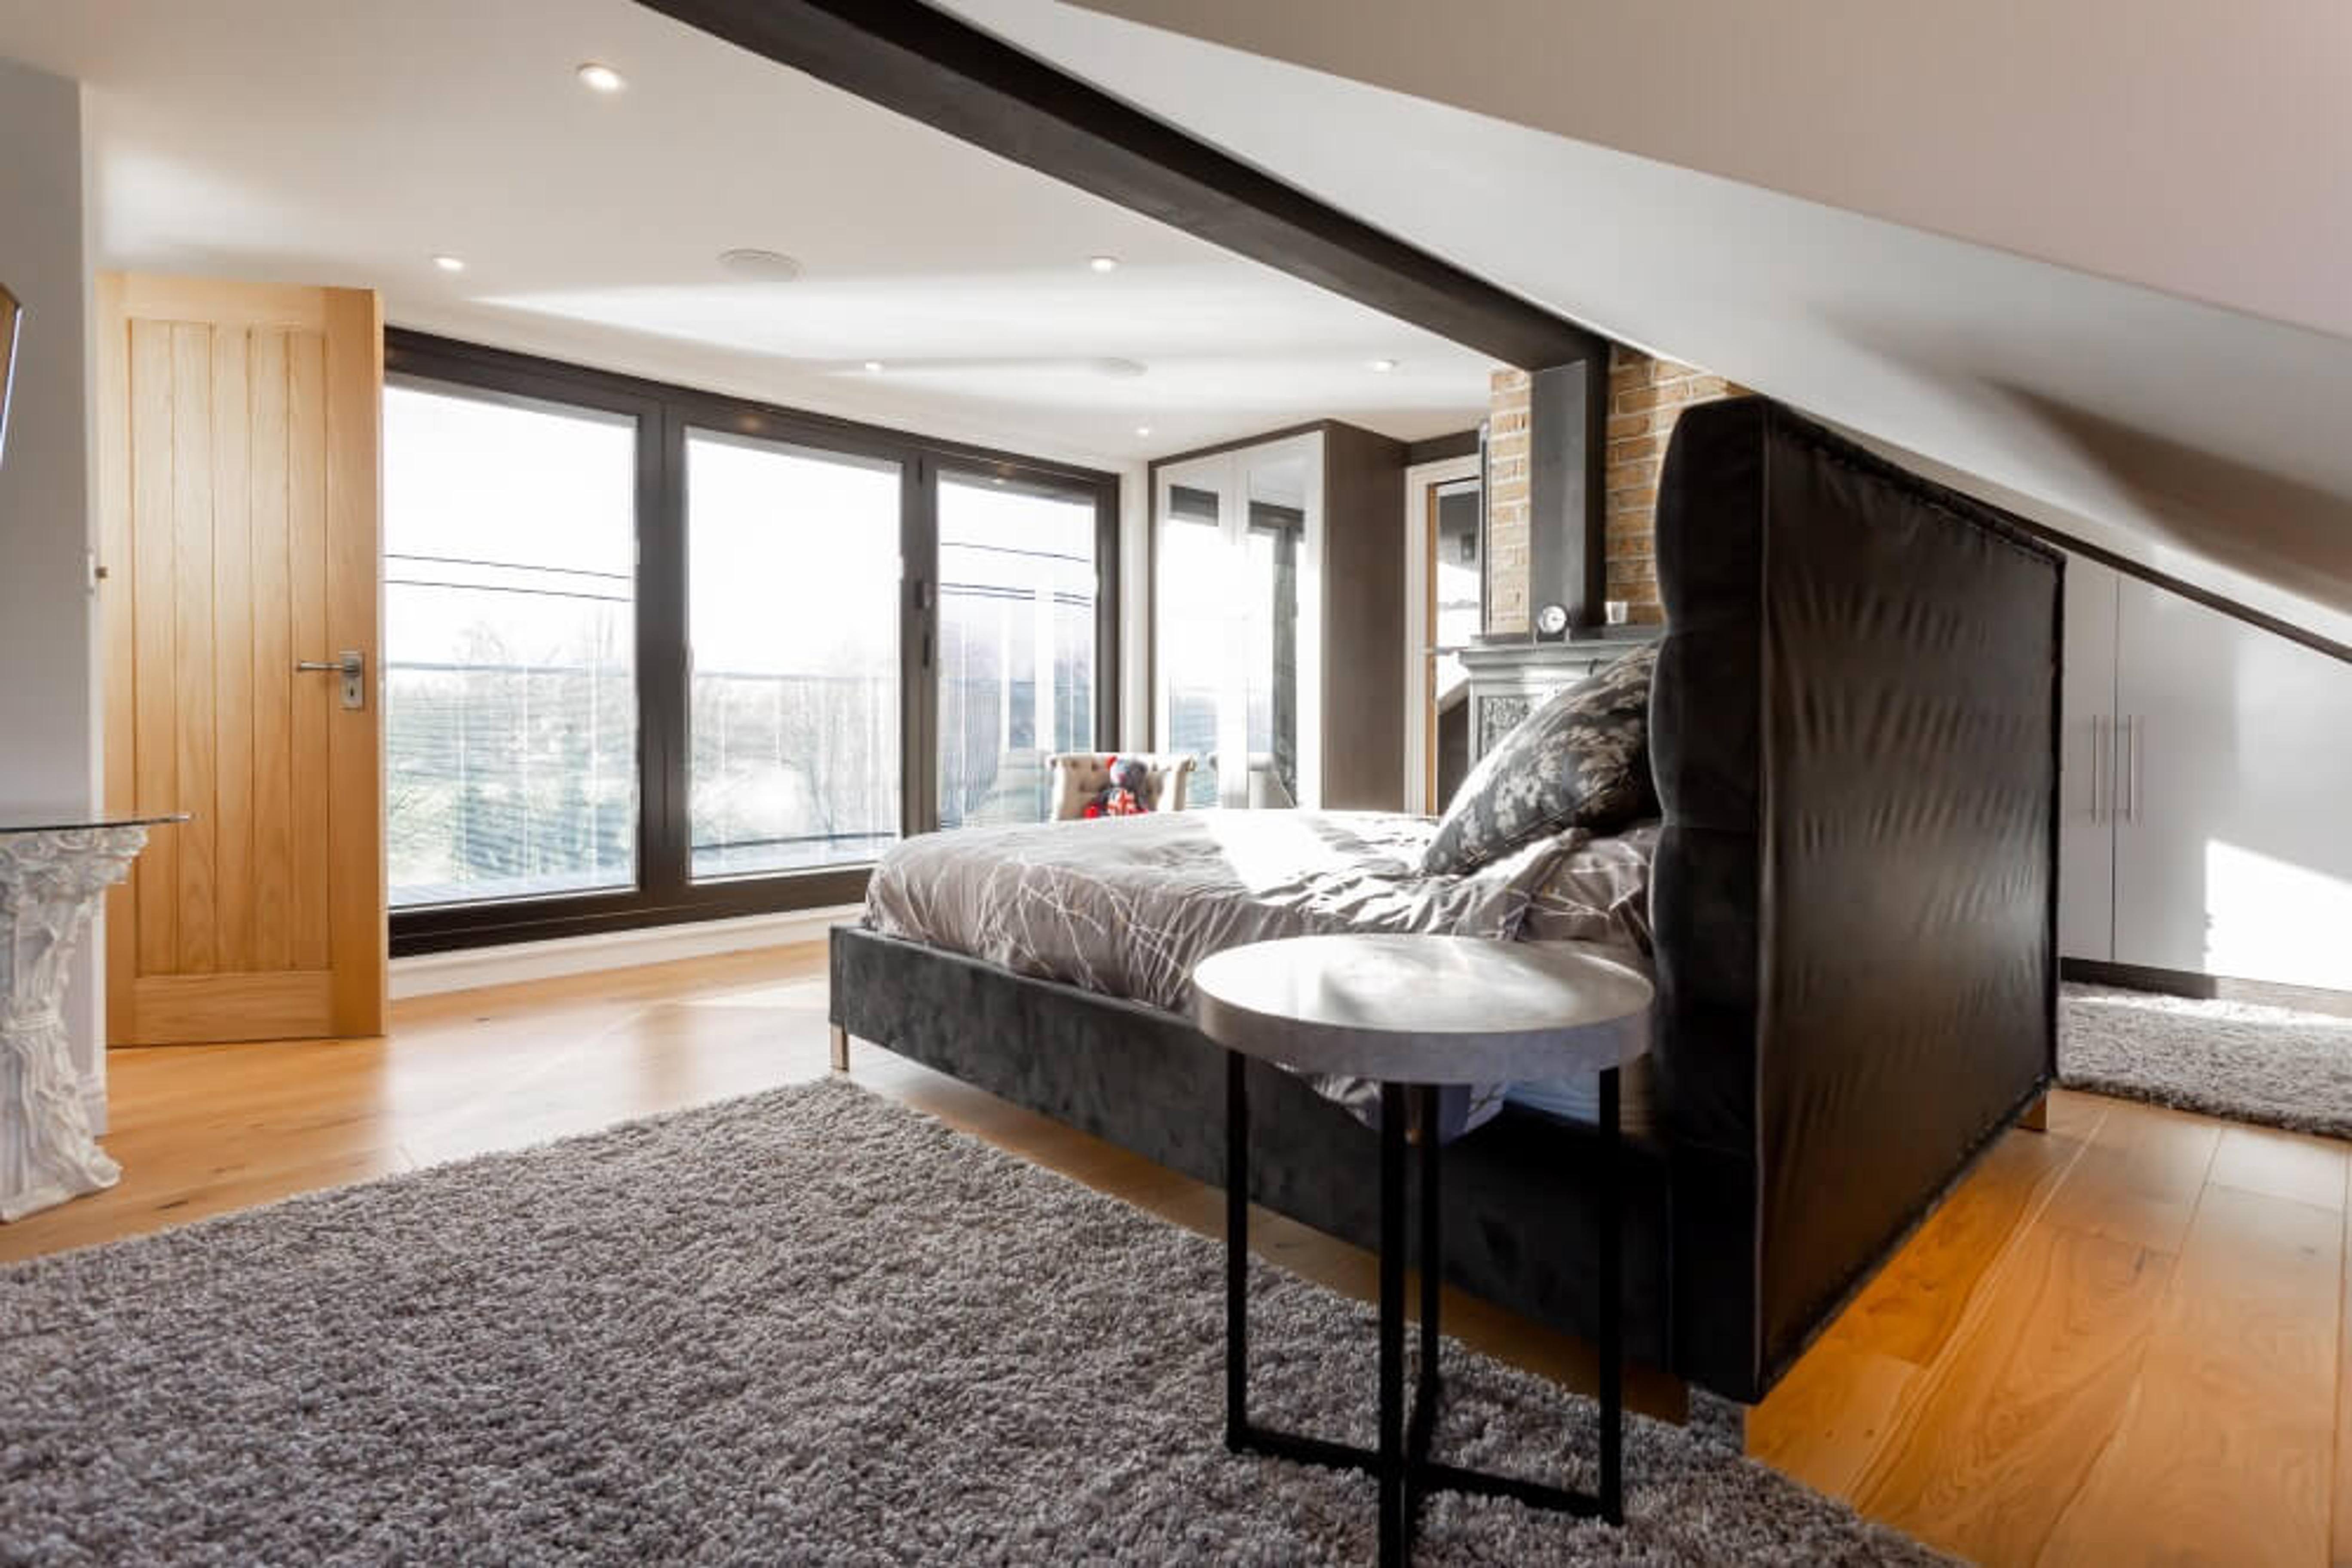 Dormer loft conversion by City Lofts London